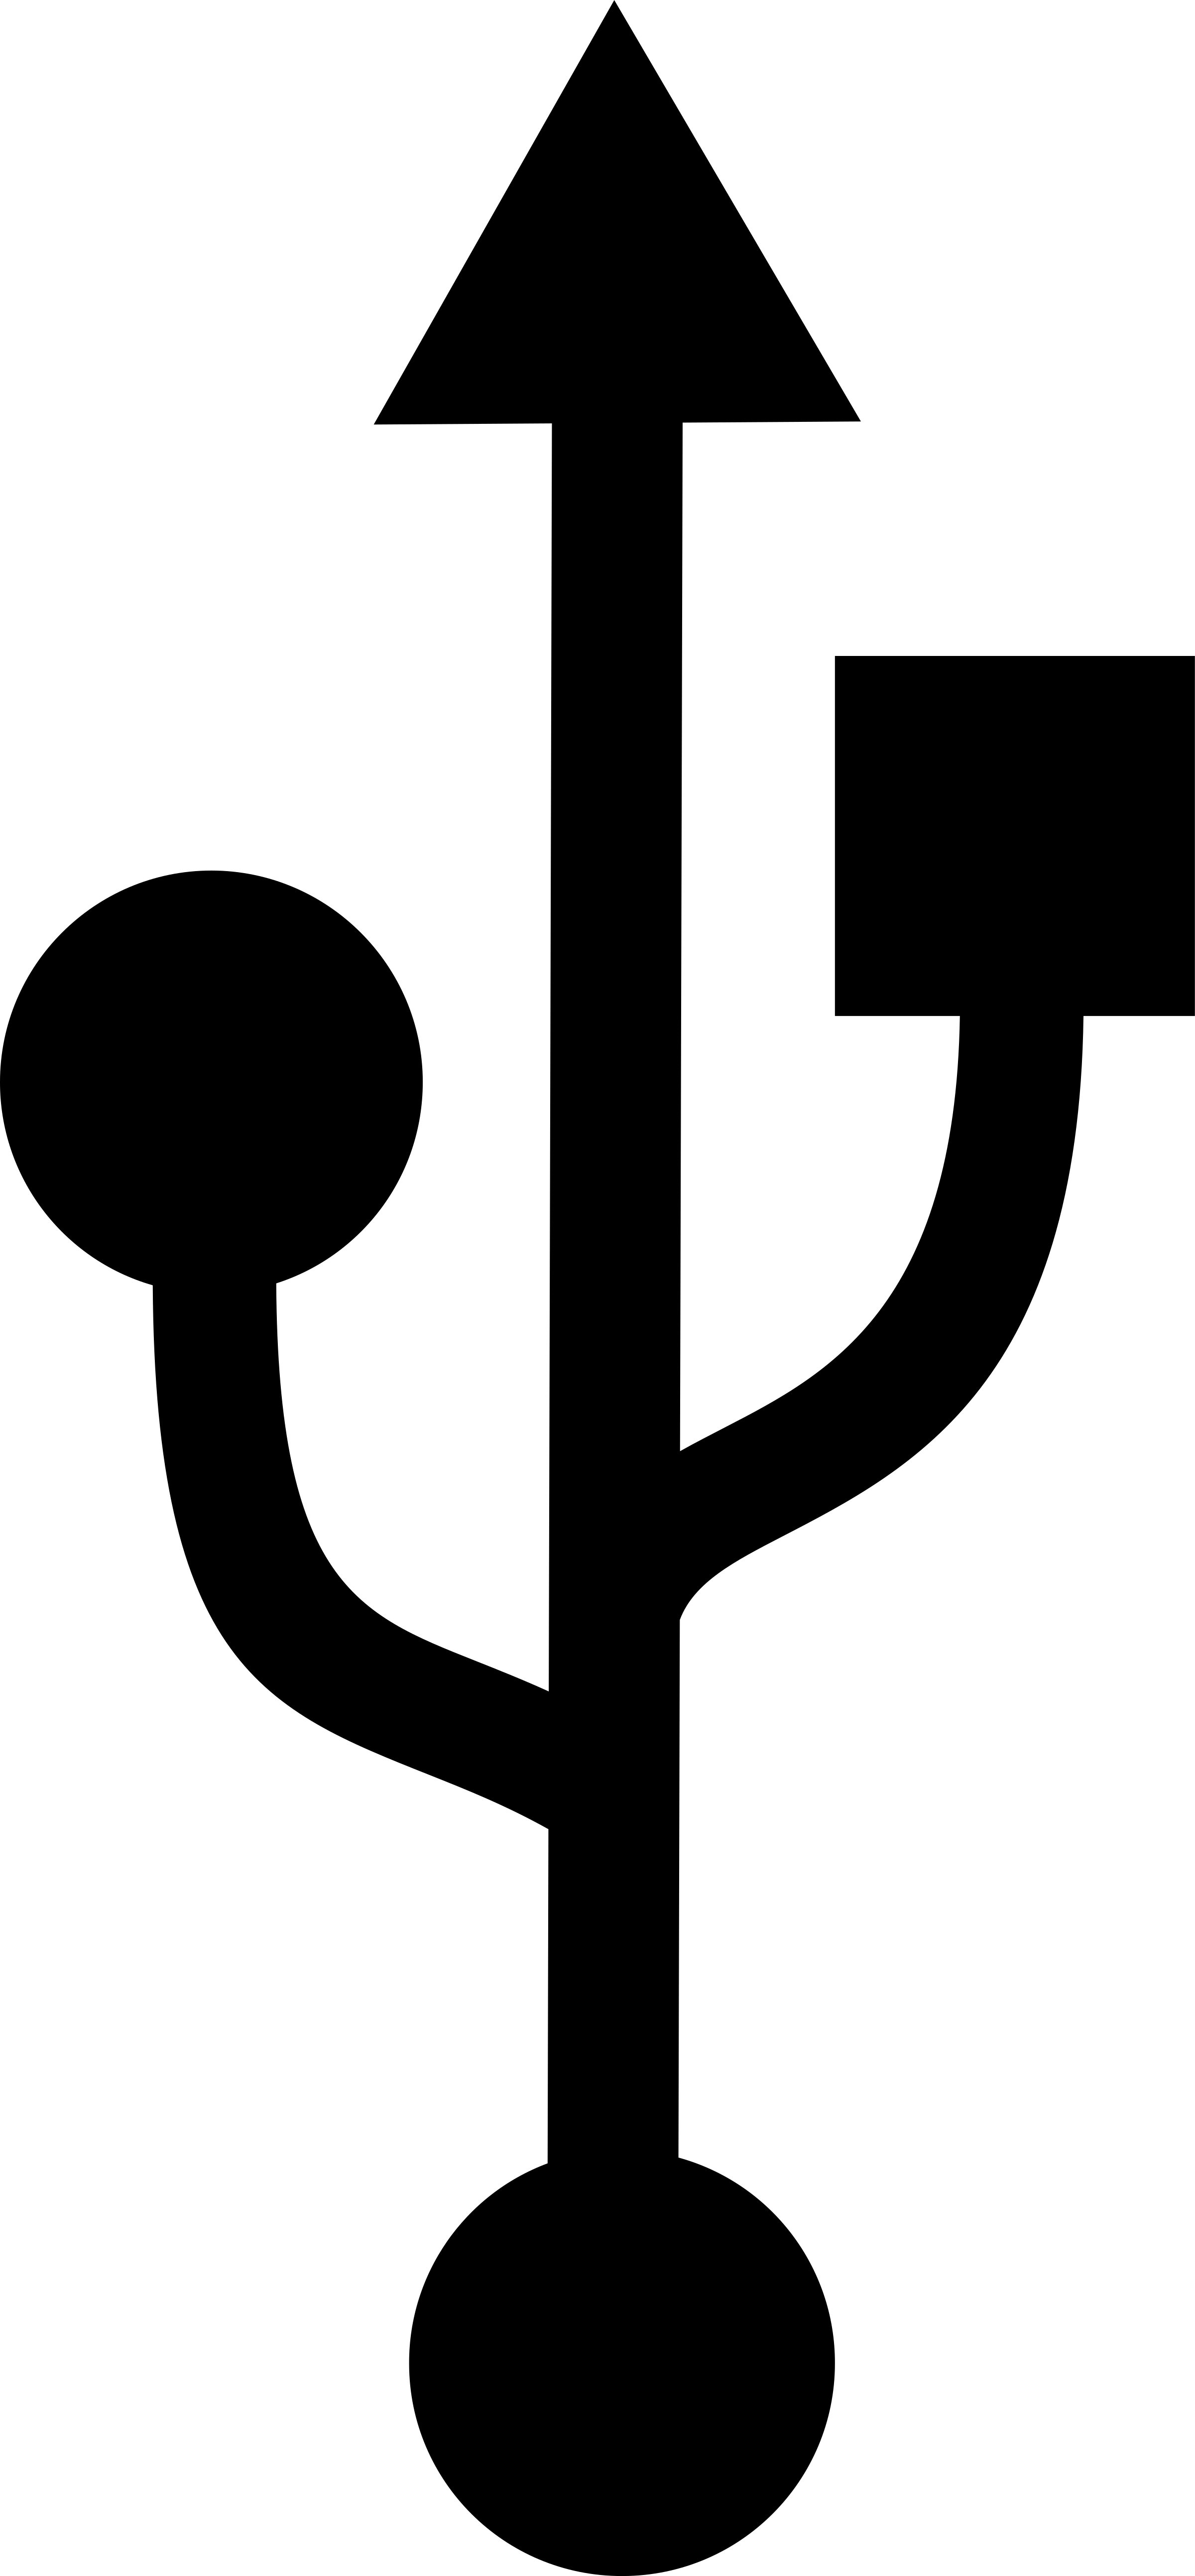 Usb Logo Black And White - Jack O Lantern Pi Stencil (2400x5172)